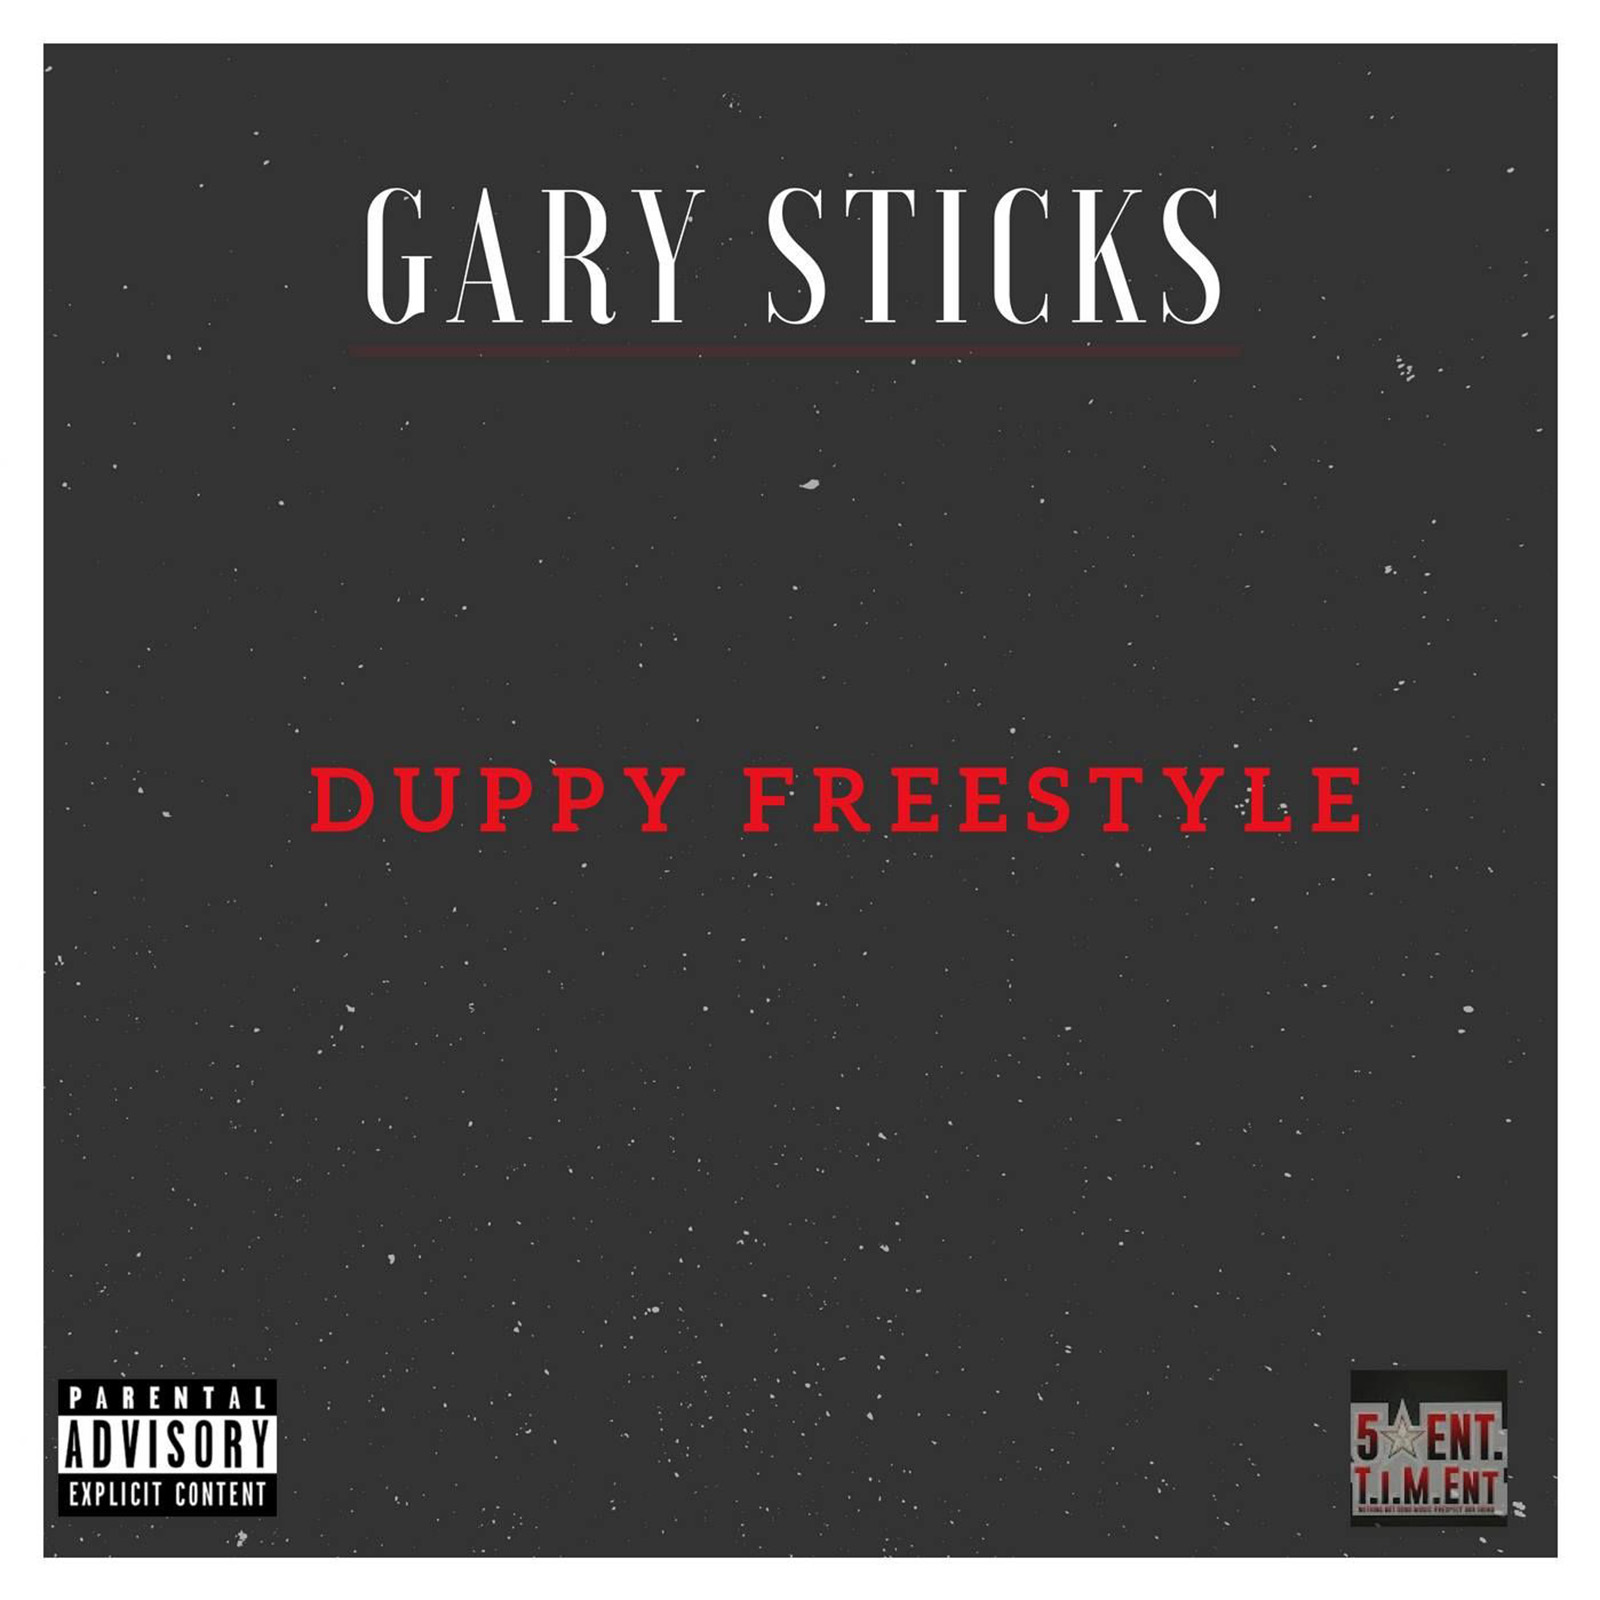 Duppy Freestyle by Gary Sticks